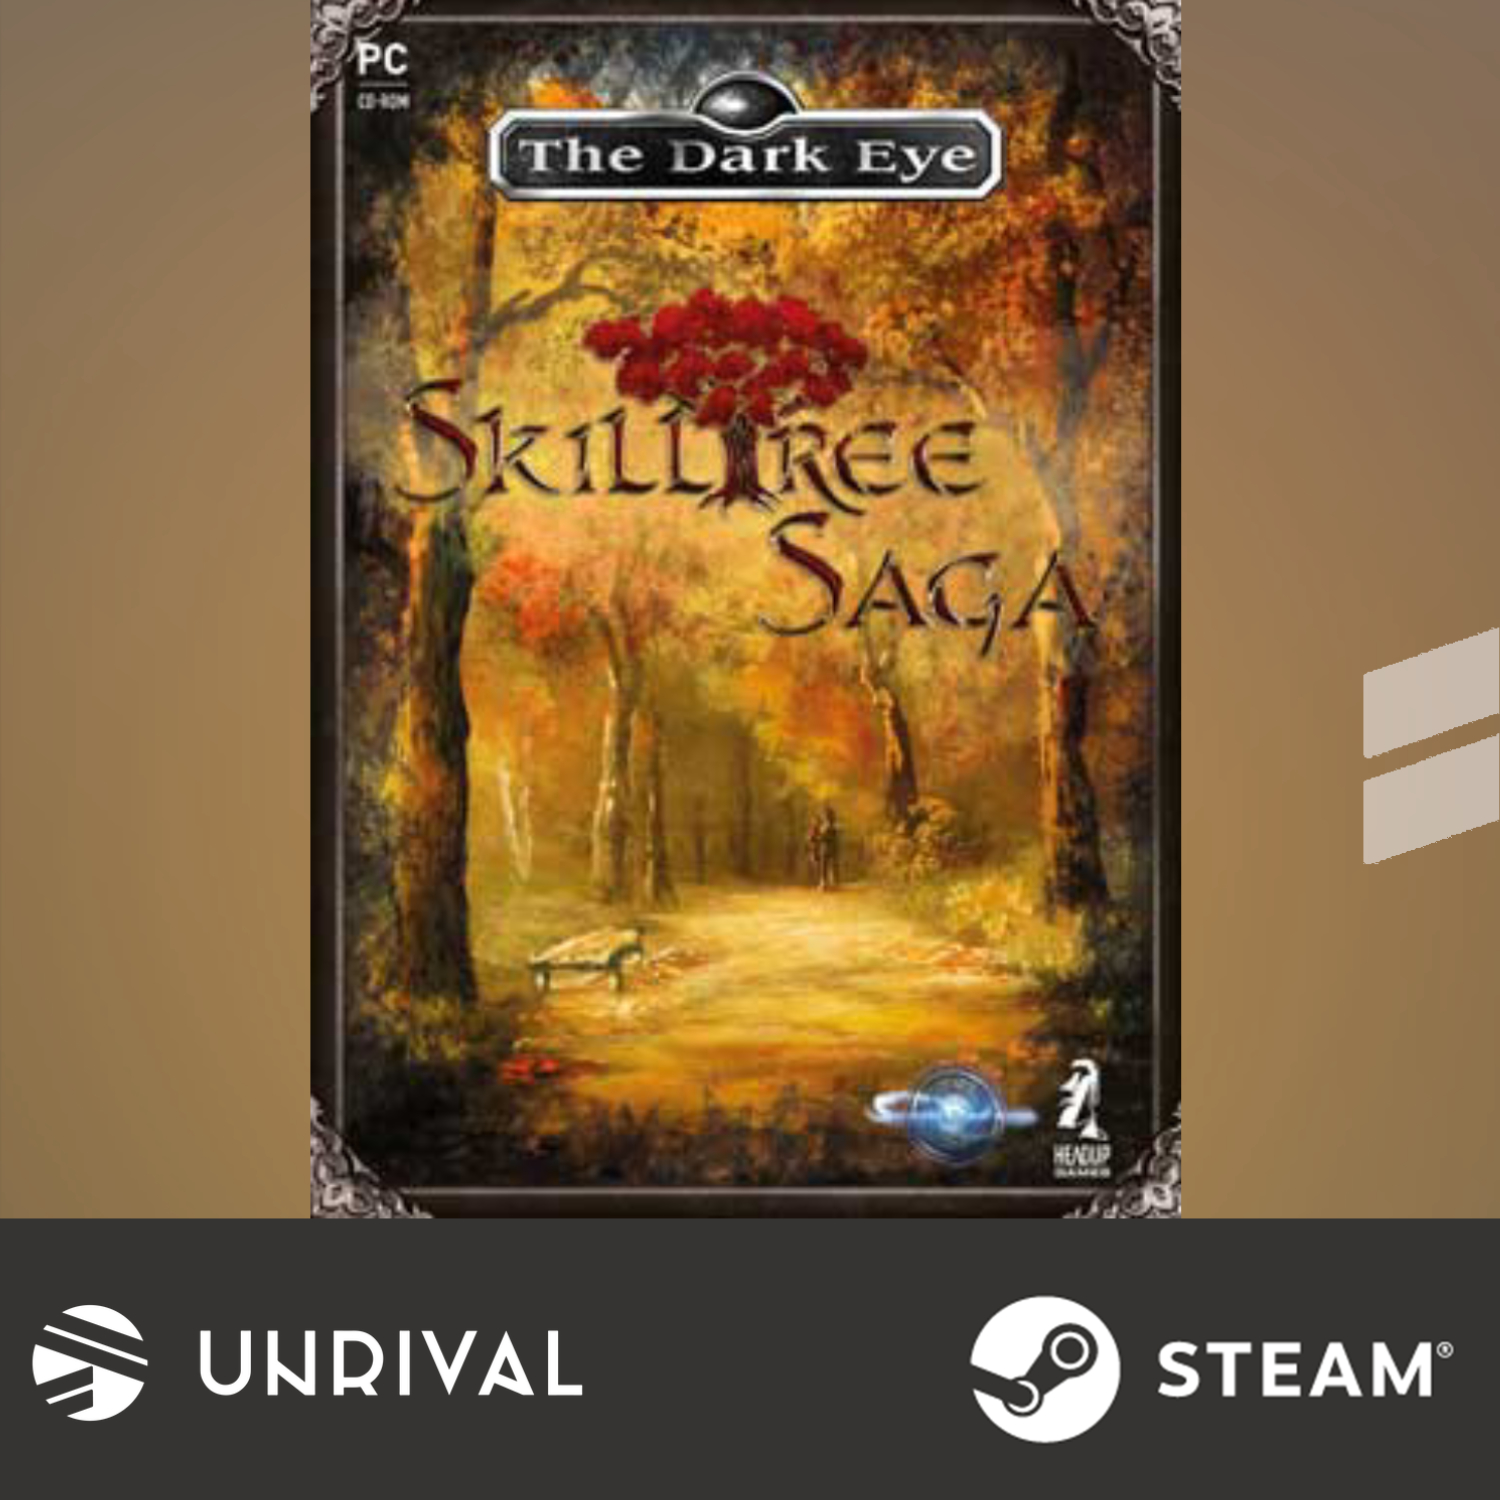 [Hot Sale] Skilltree Saga PC Digital Download Game (Single Player) - Unrival